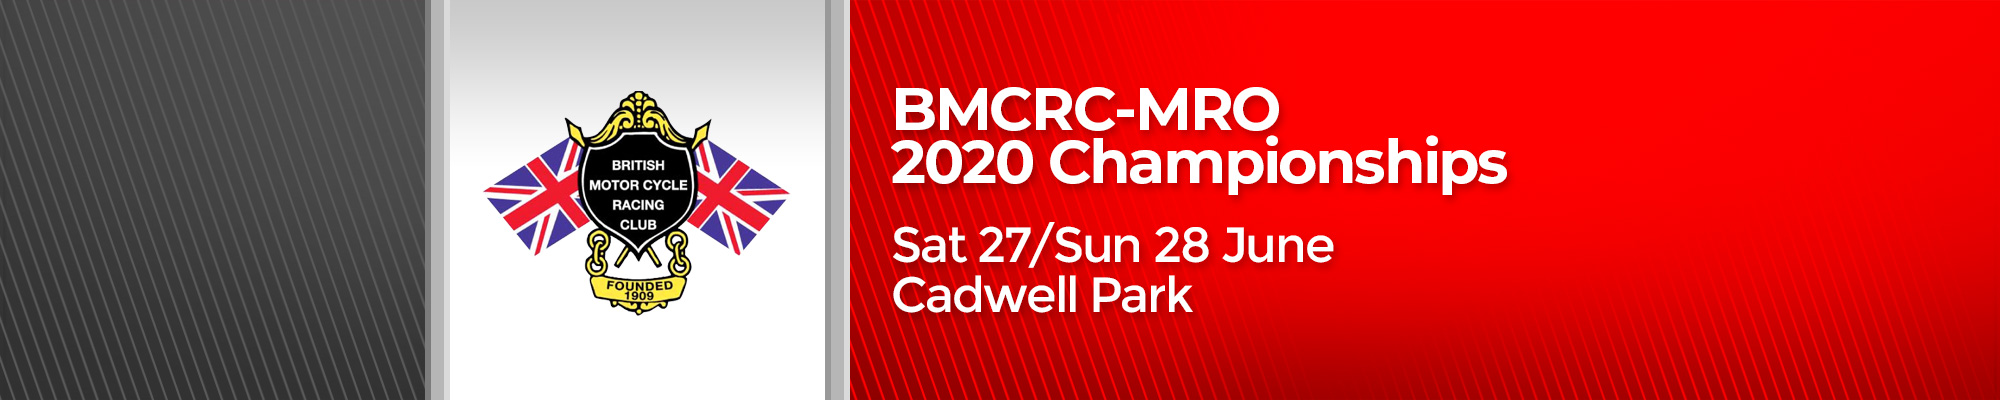 BMCRC-MRO 2020 Championships - POSTPONED